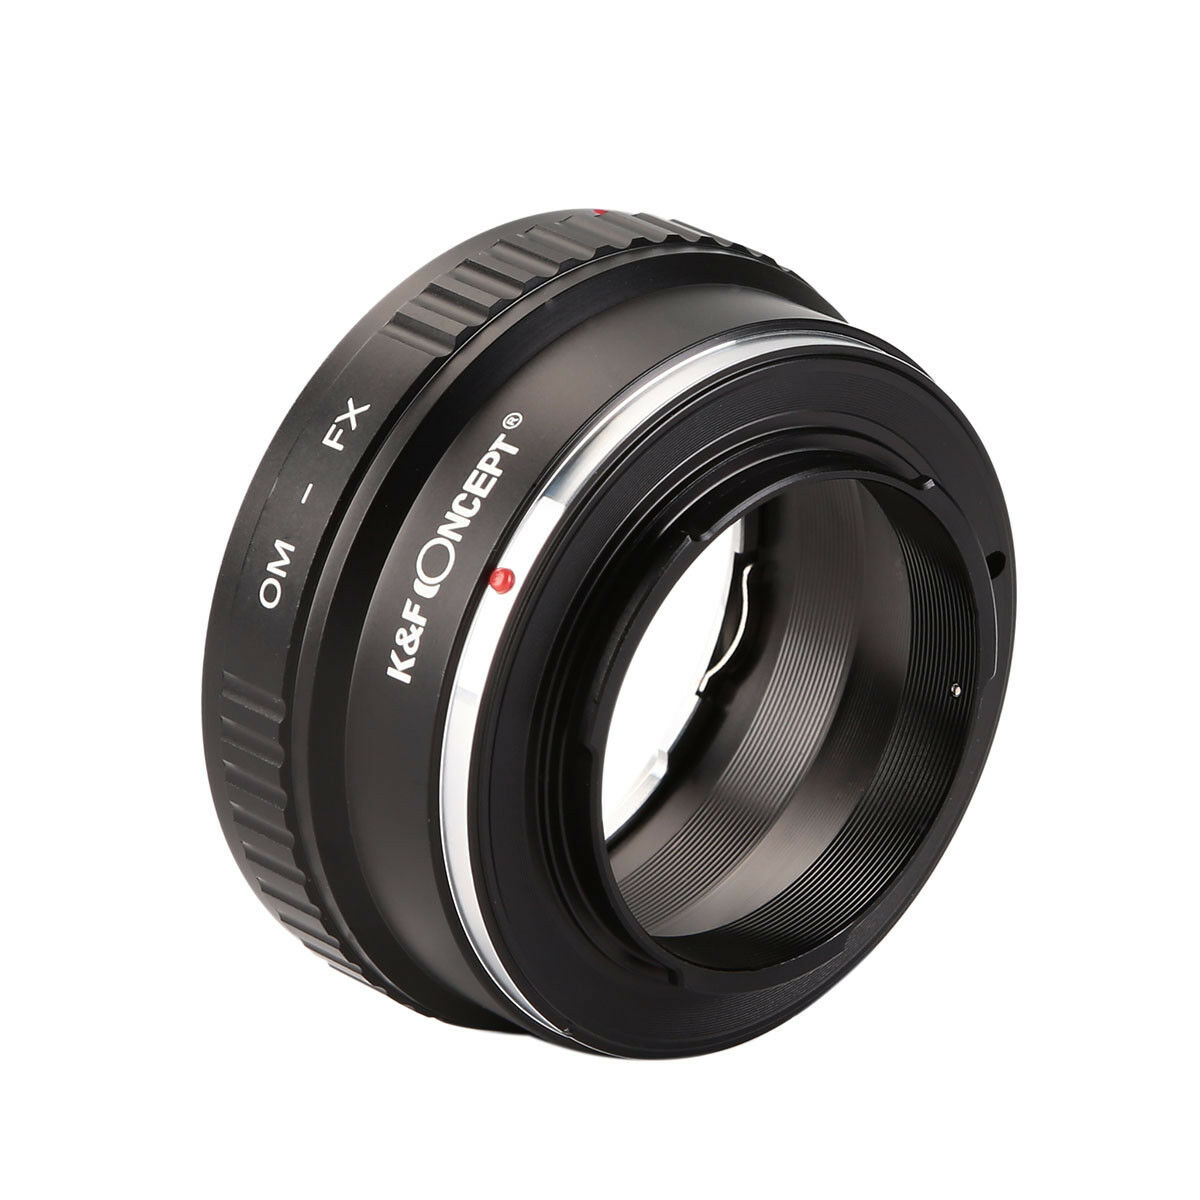 K&F Concept Lens Adapter KF06.106 for OM - FX อะแดปเตอร์เลนส์